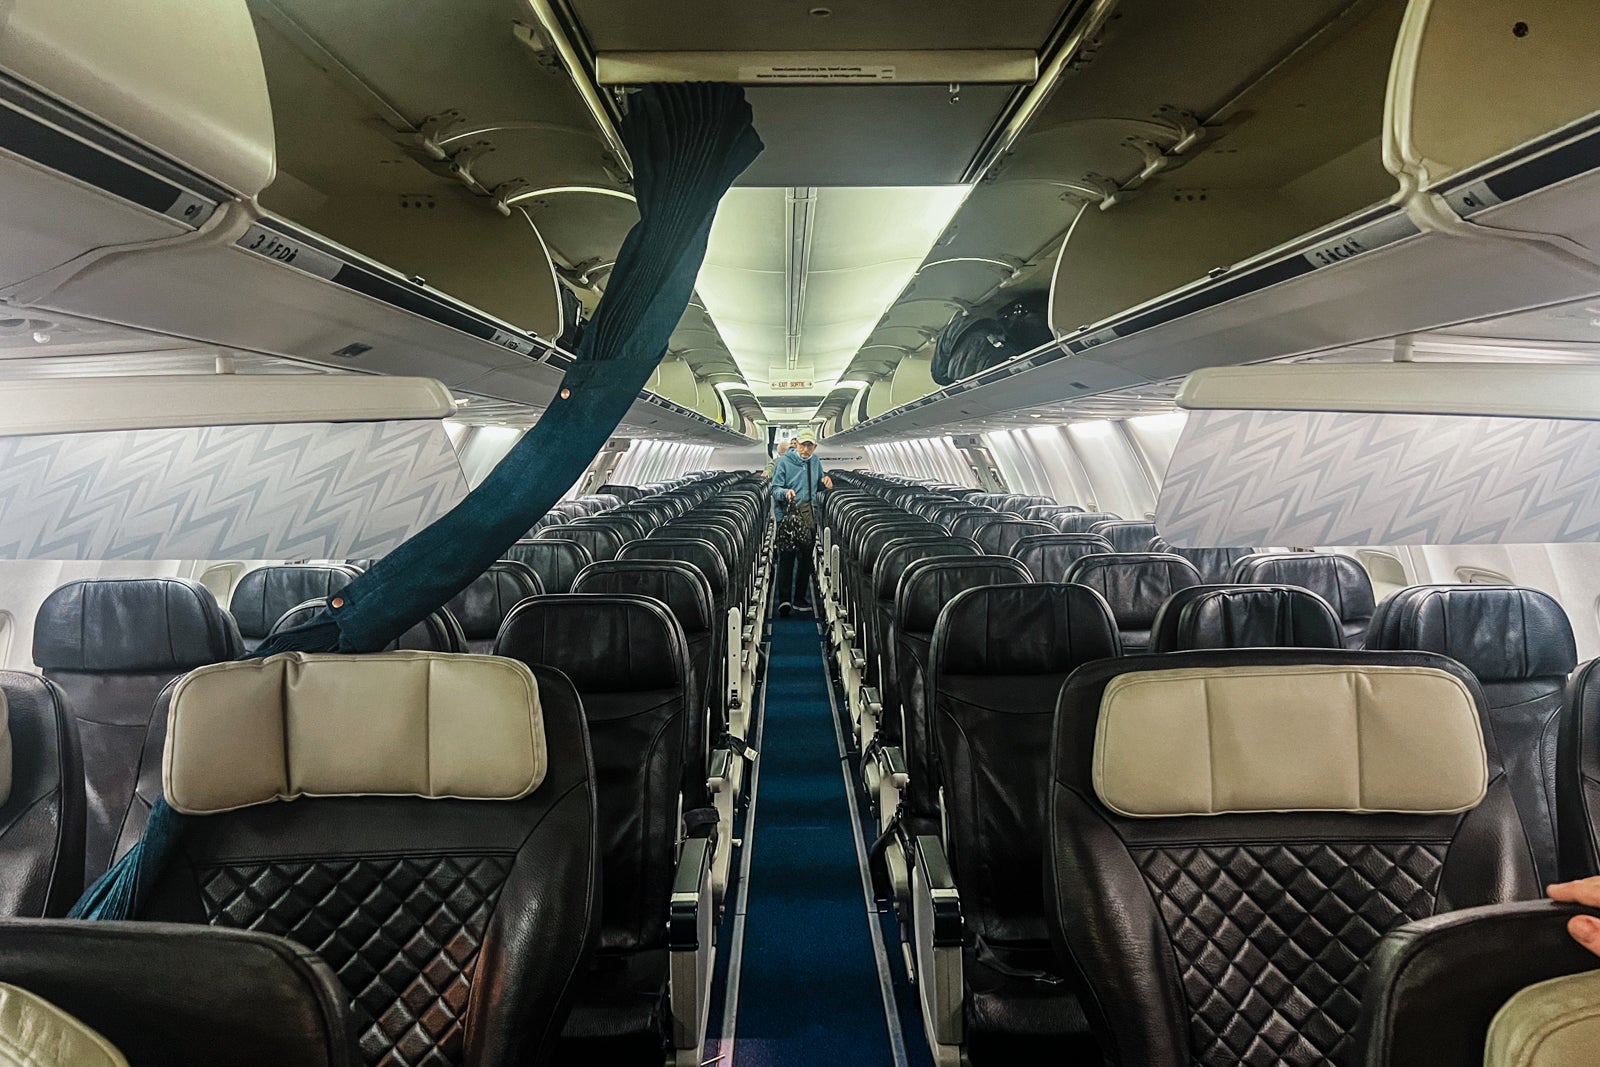 WestJet Boeing 737 economy flight review: Is it worth it? - The Points Guy